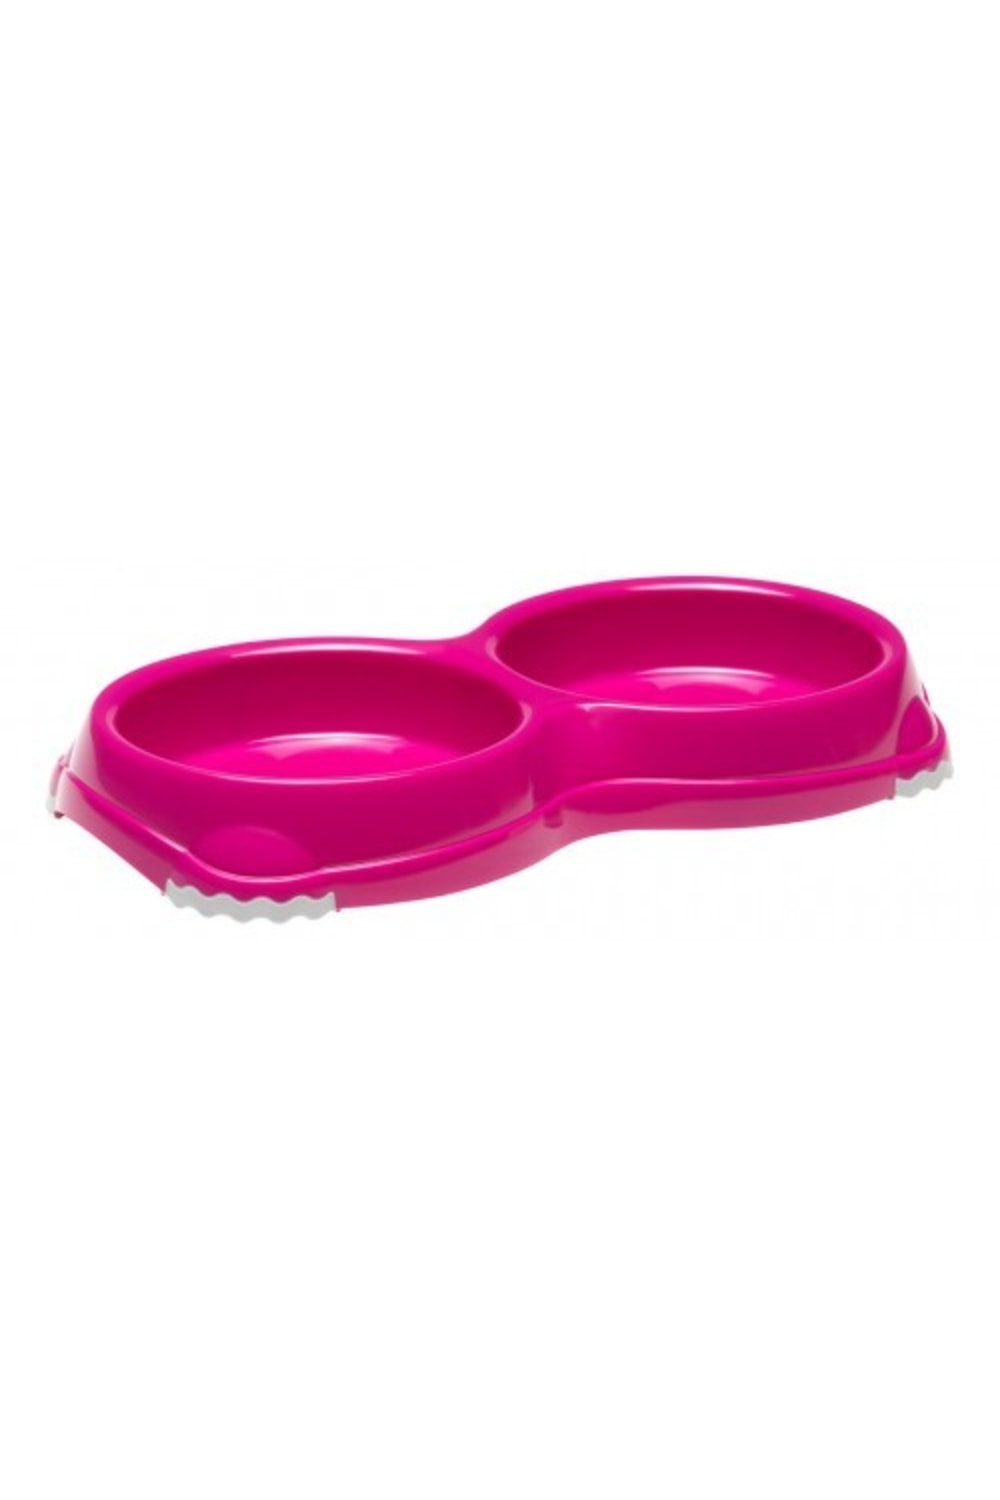 Moderna Smarty Dog Bowl (Hot Pink) (0.35pint)